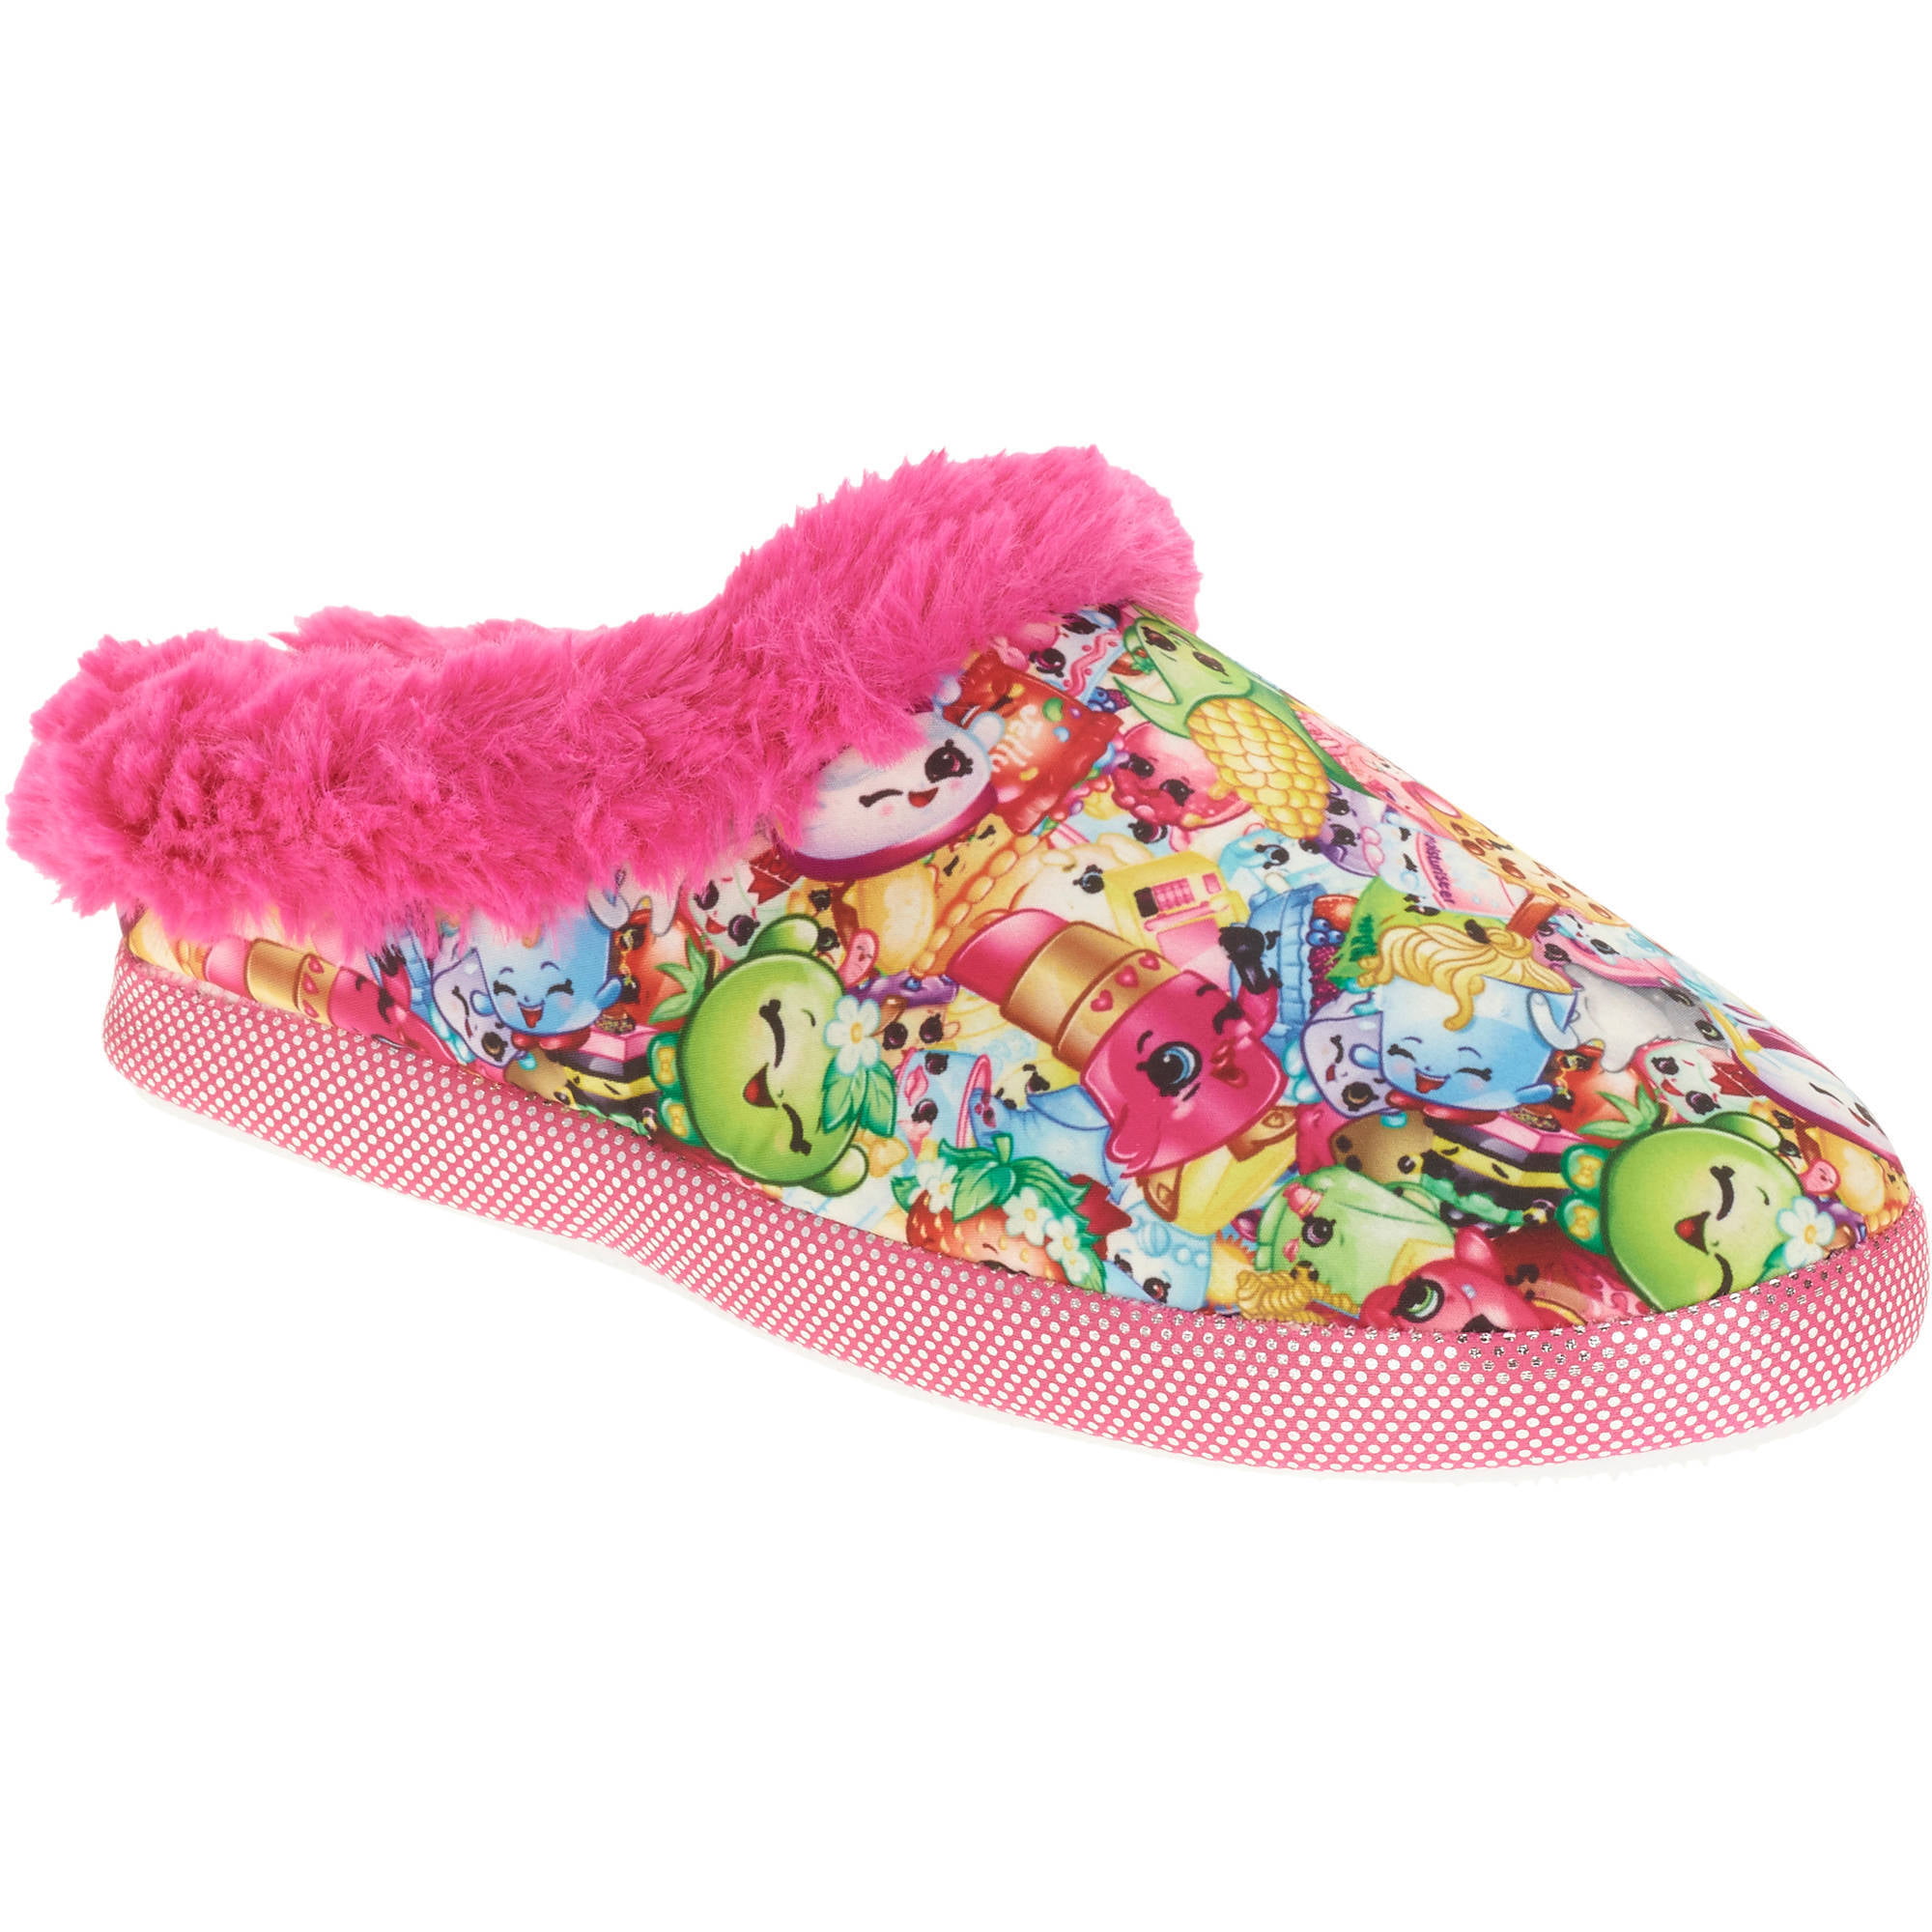 Girls' Slippers House Shoes - Walmart.com